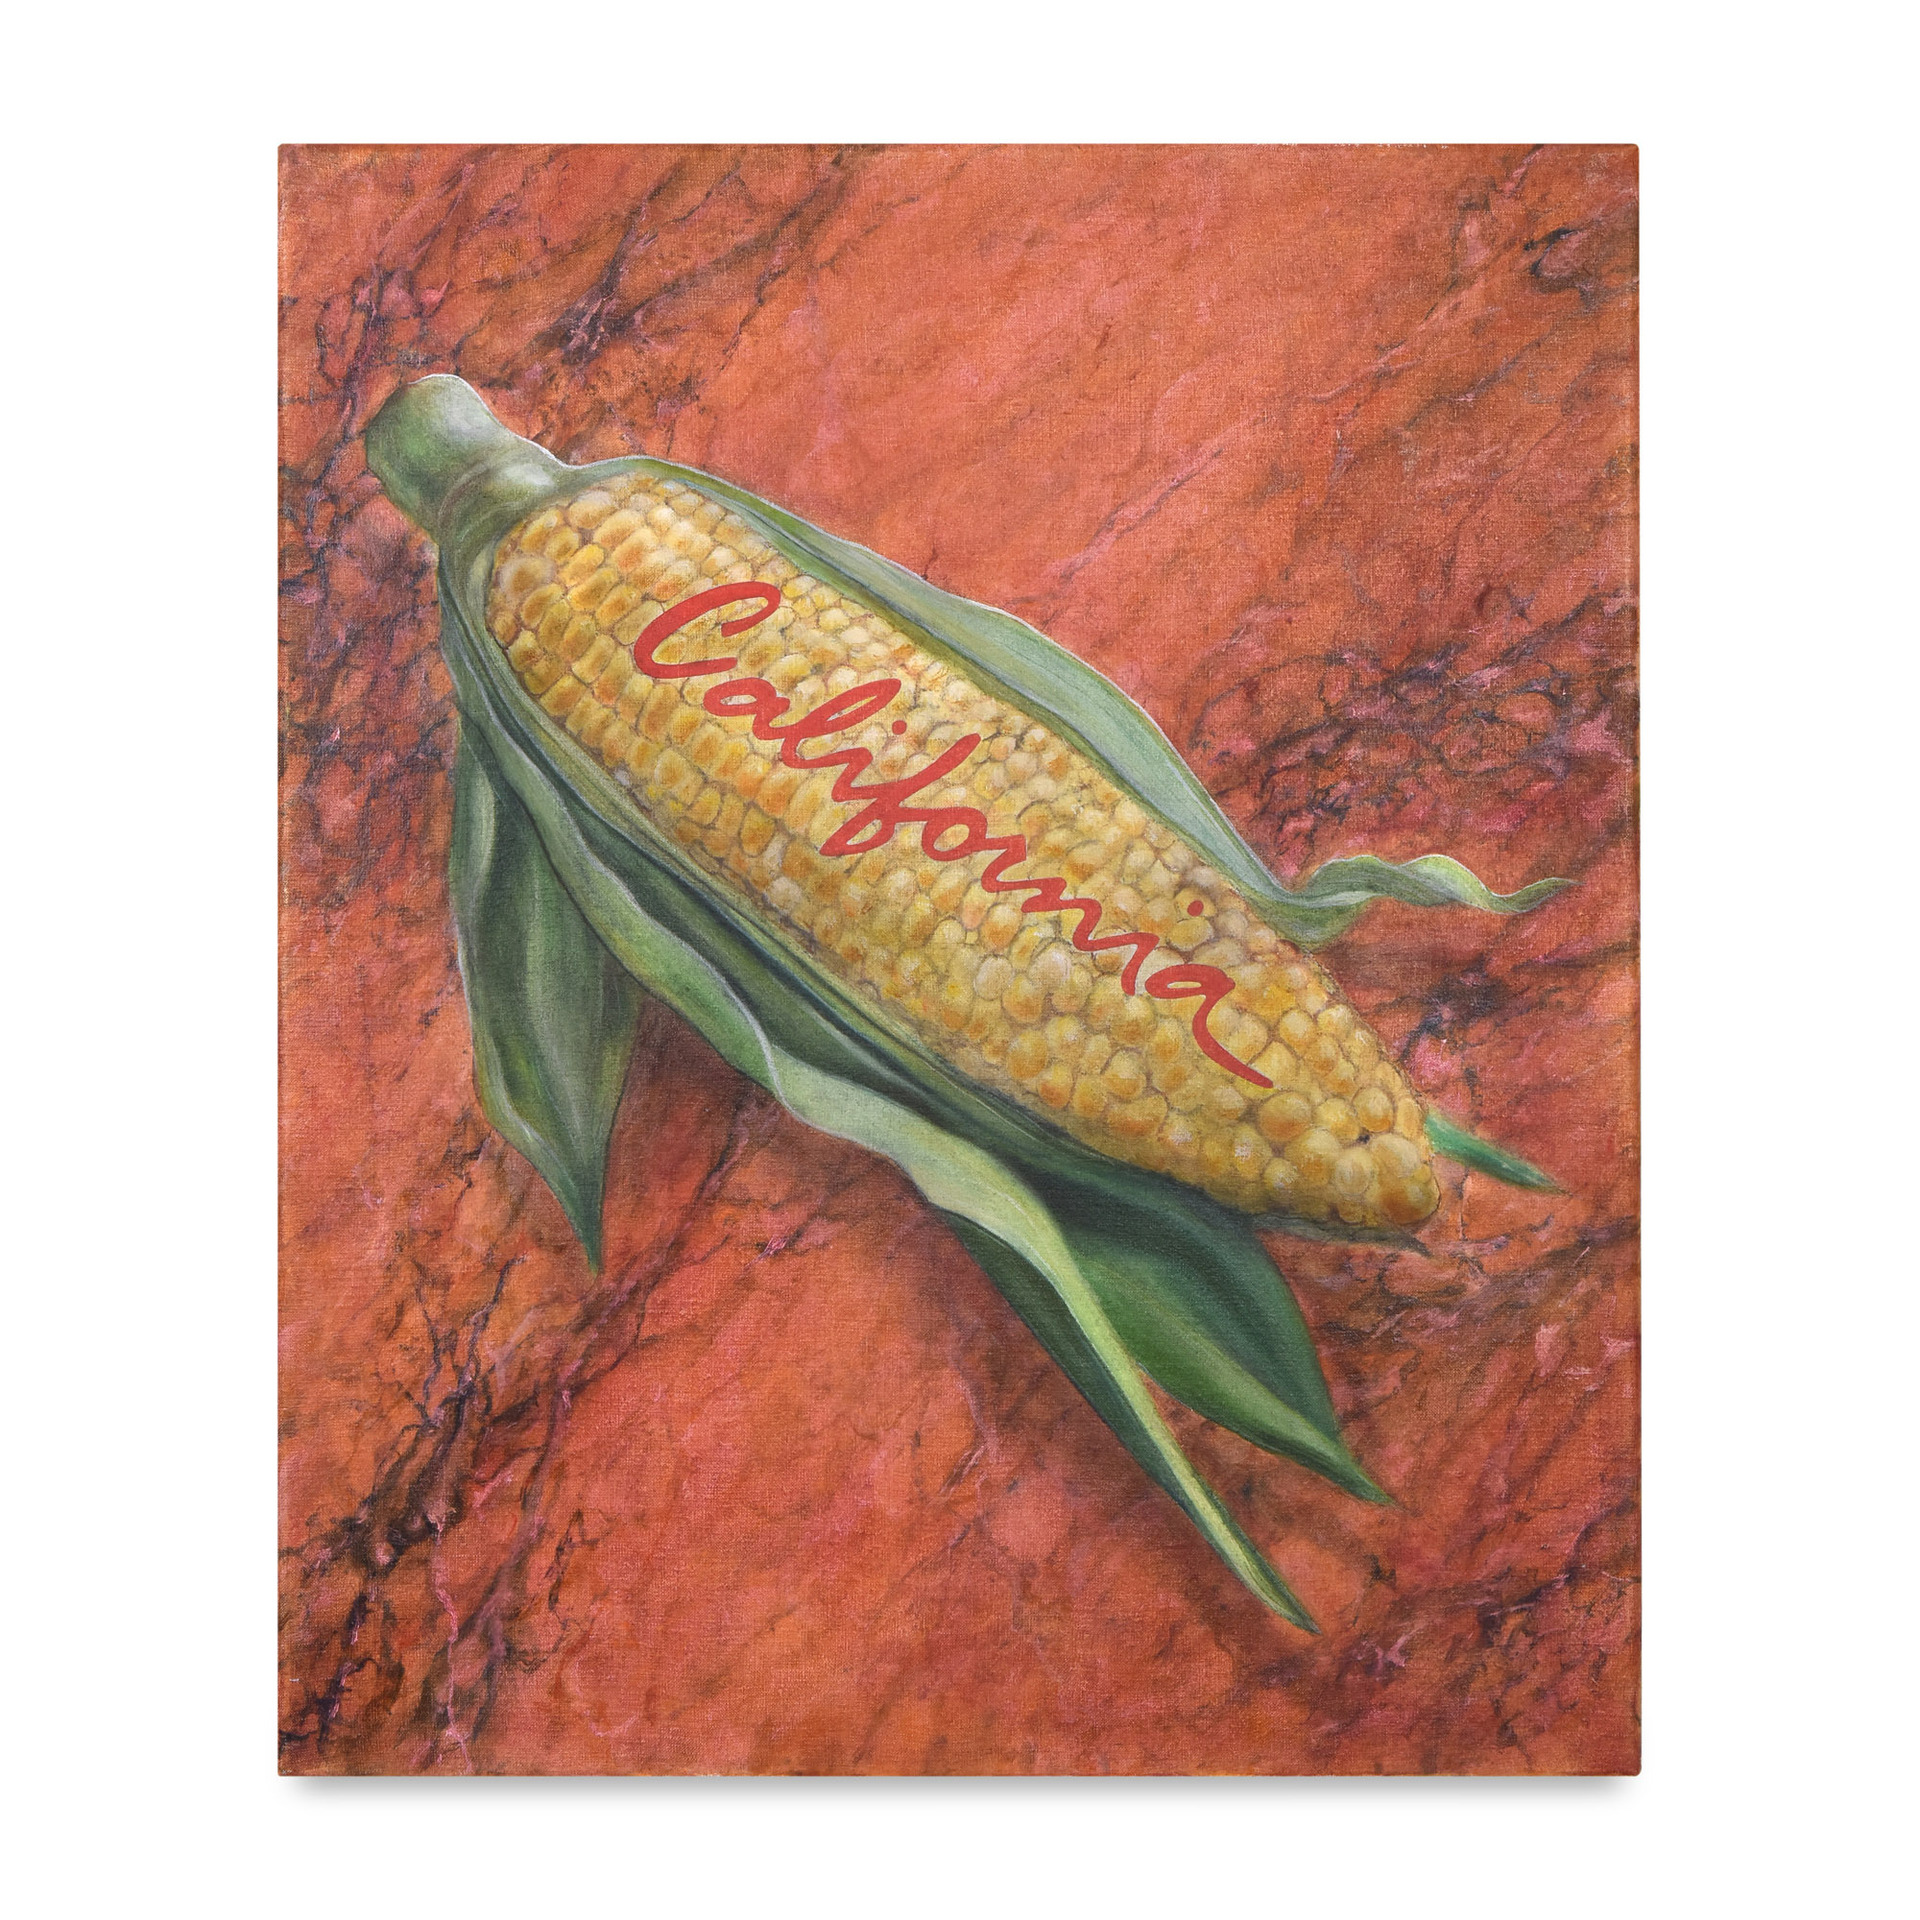 Scott Young, Still Life with California Corn, 2021. Oil on linen, 60 x 50 cm